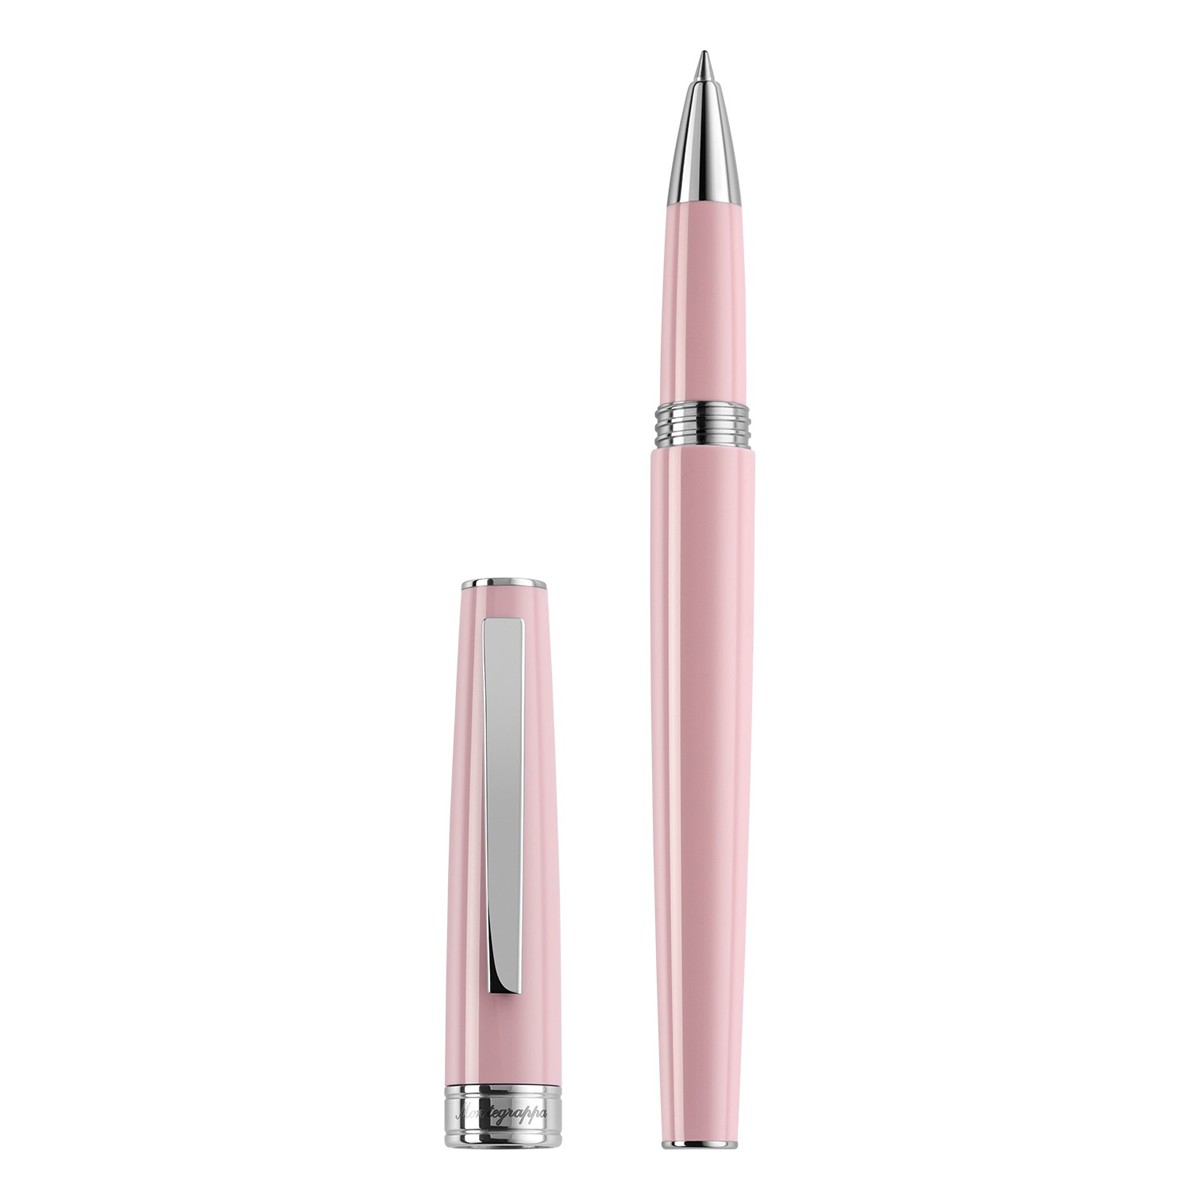 Montegrappa - Armonia - Pink - Rollerball Pen